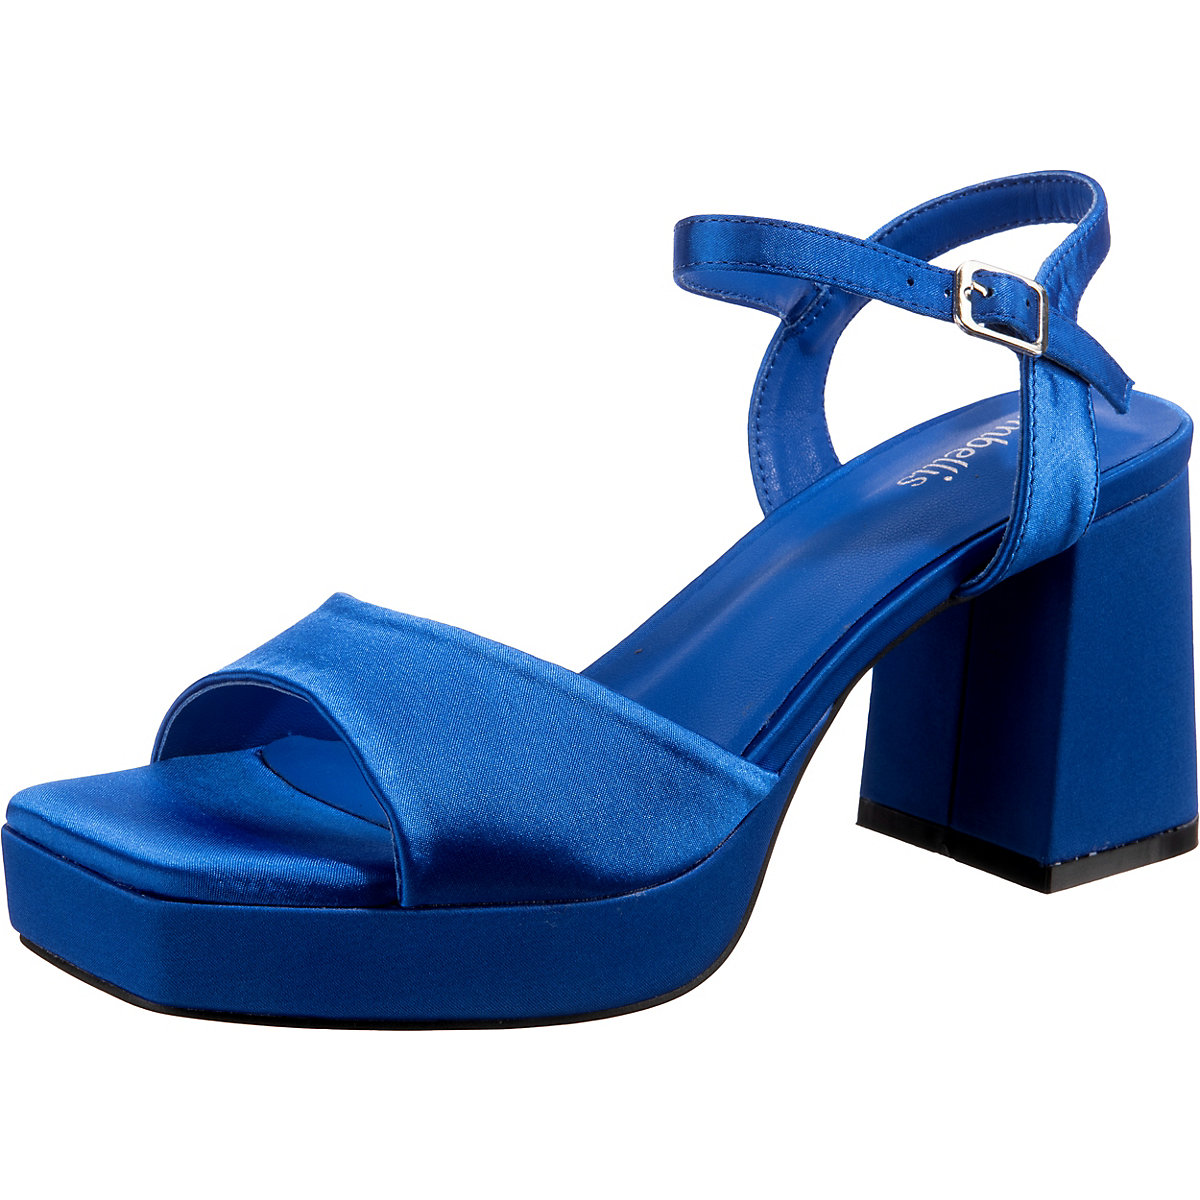 ambellis Fashion Plateau-Sandaletten blau